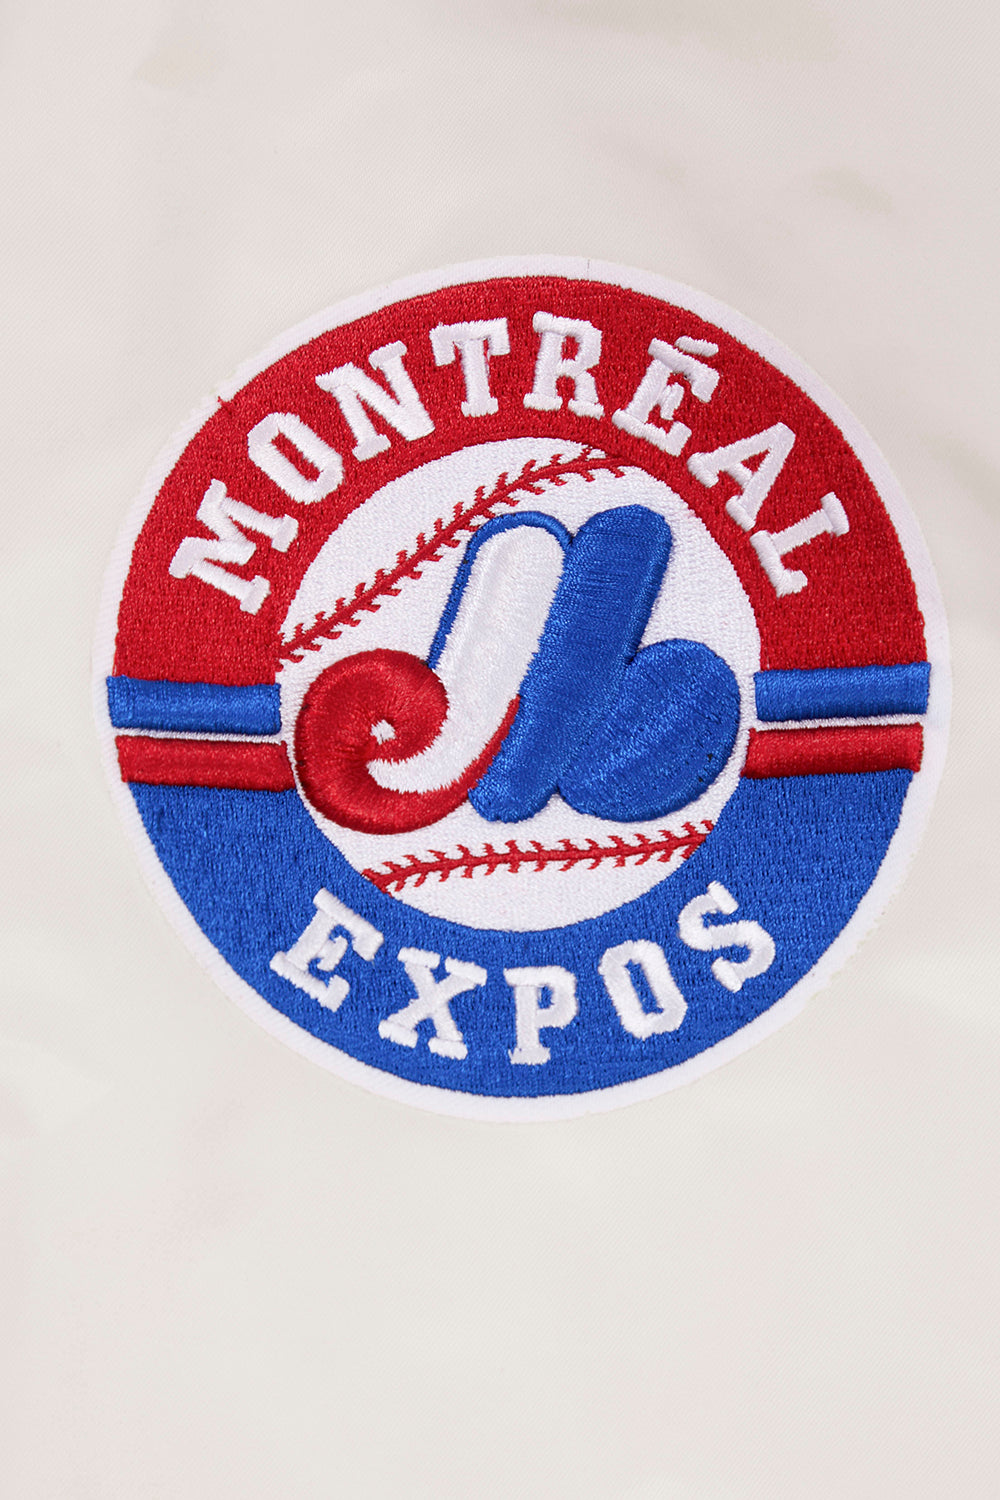 Record-Journal Expos - Greater Hartford Twilight Baseball League